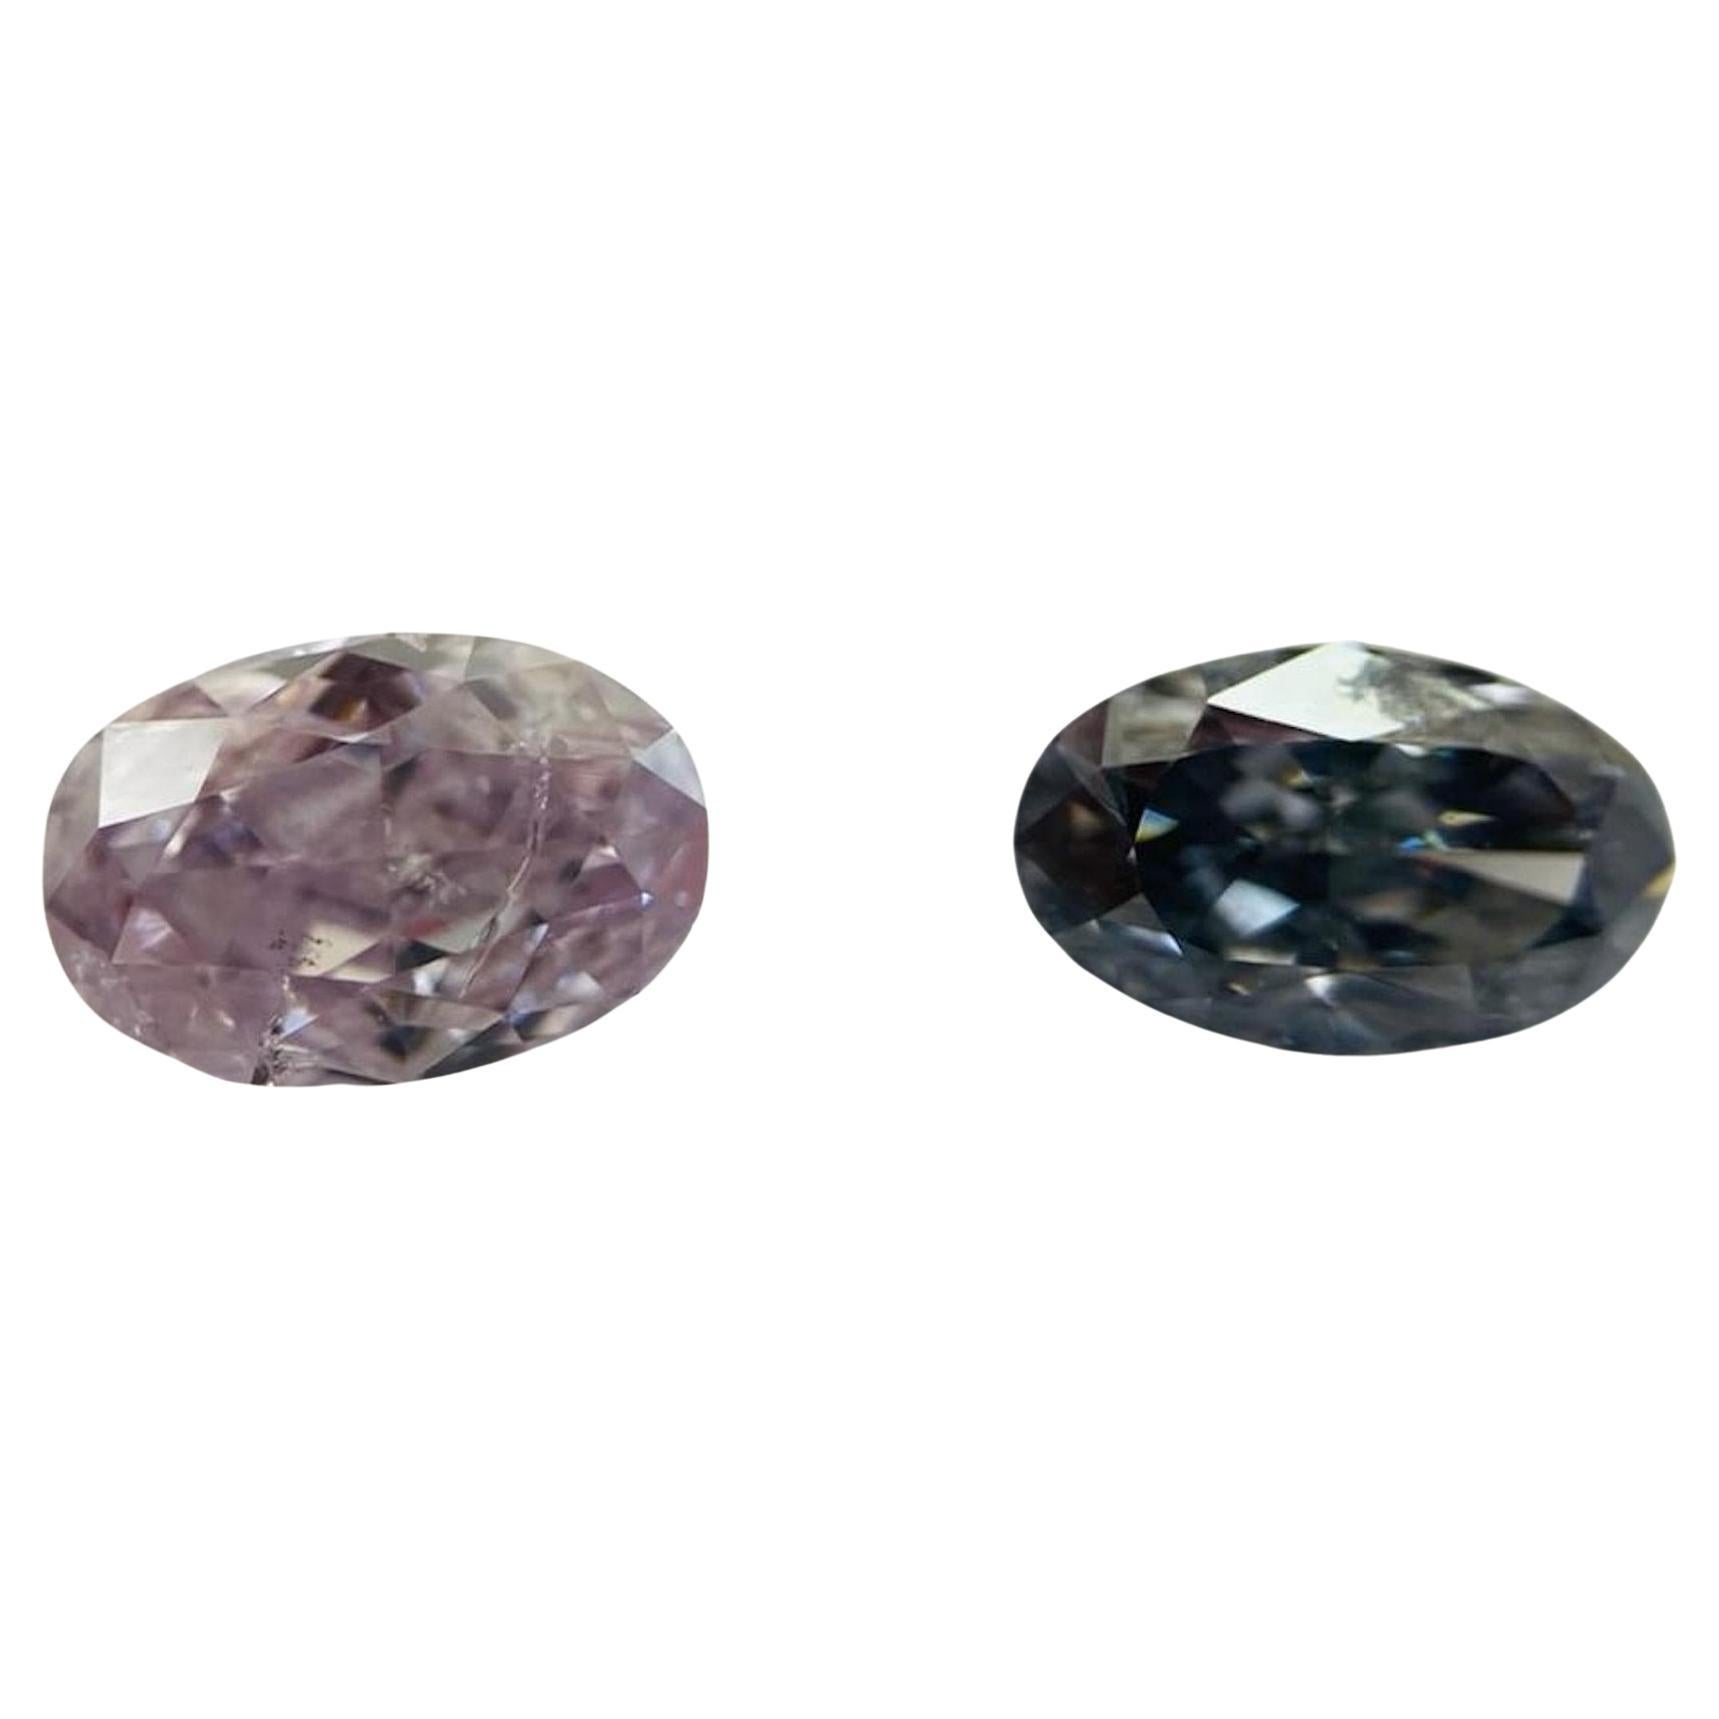 Poids total en carats de 0,86 carat combo naturel rose violacé et bleu-vert GIA